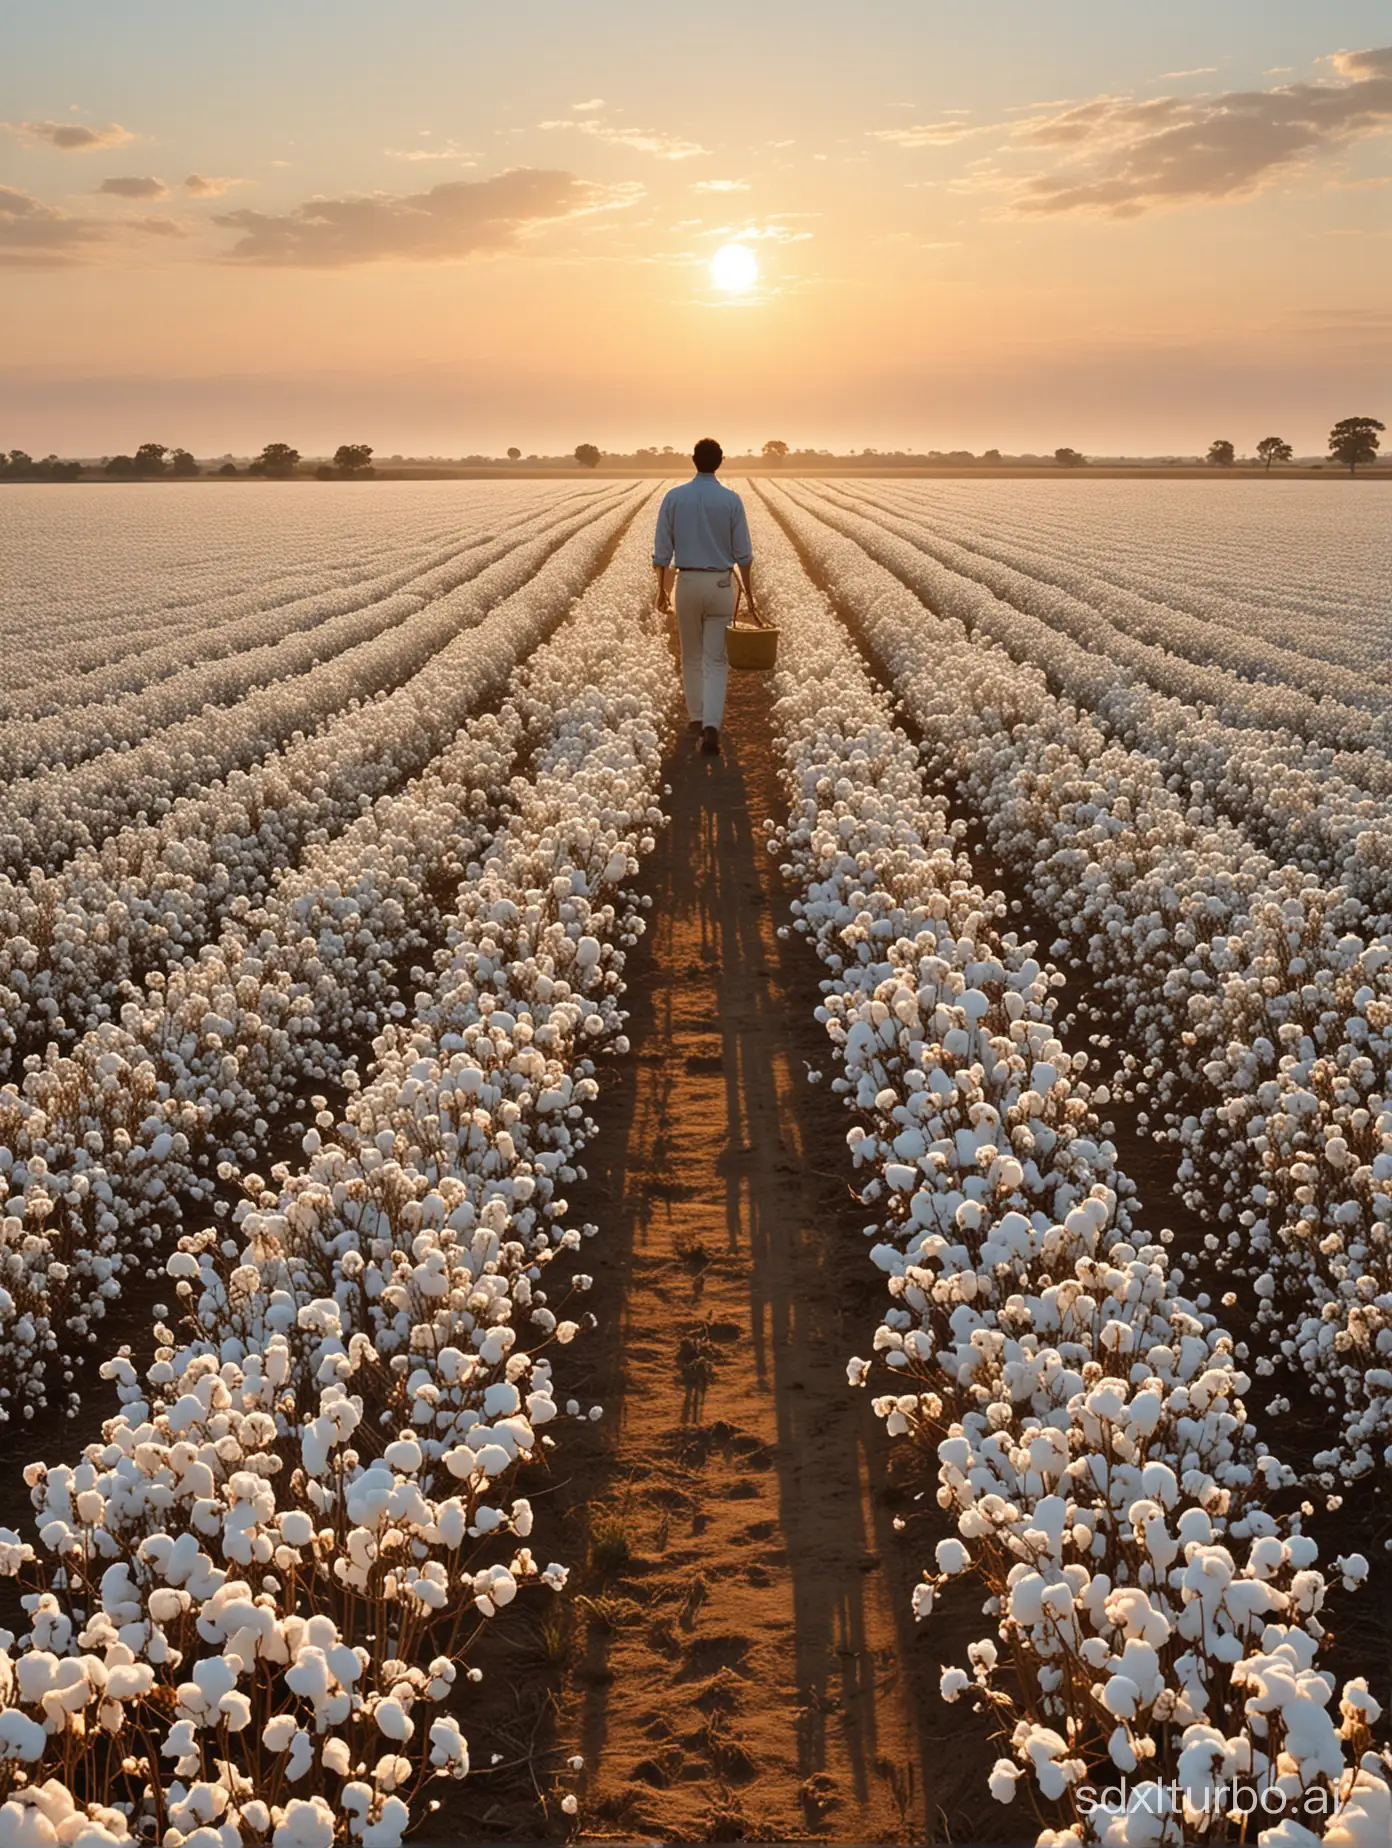 Tranquil-Sunset-Cotton-Harvest-Endless-Fields-and-Golden-Light